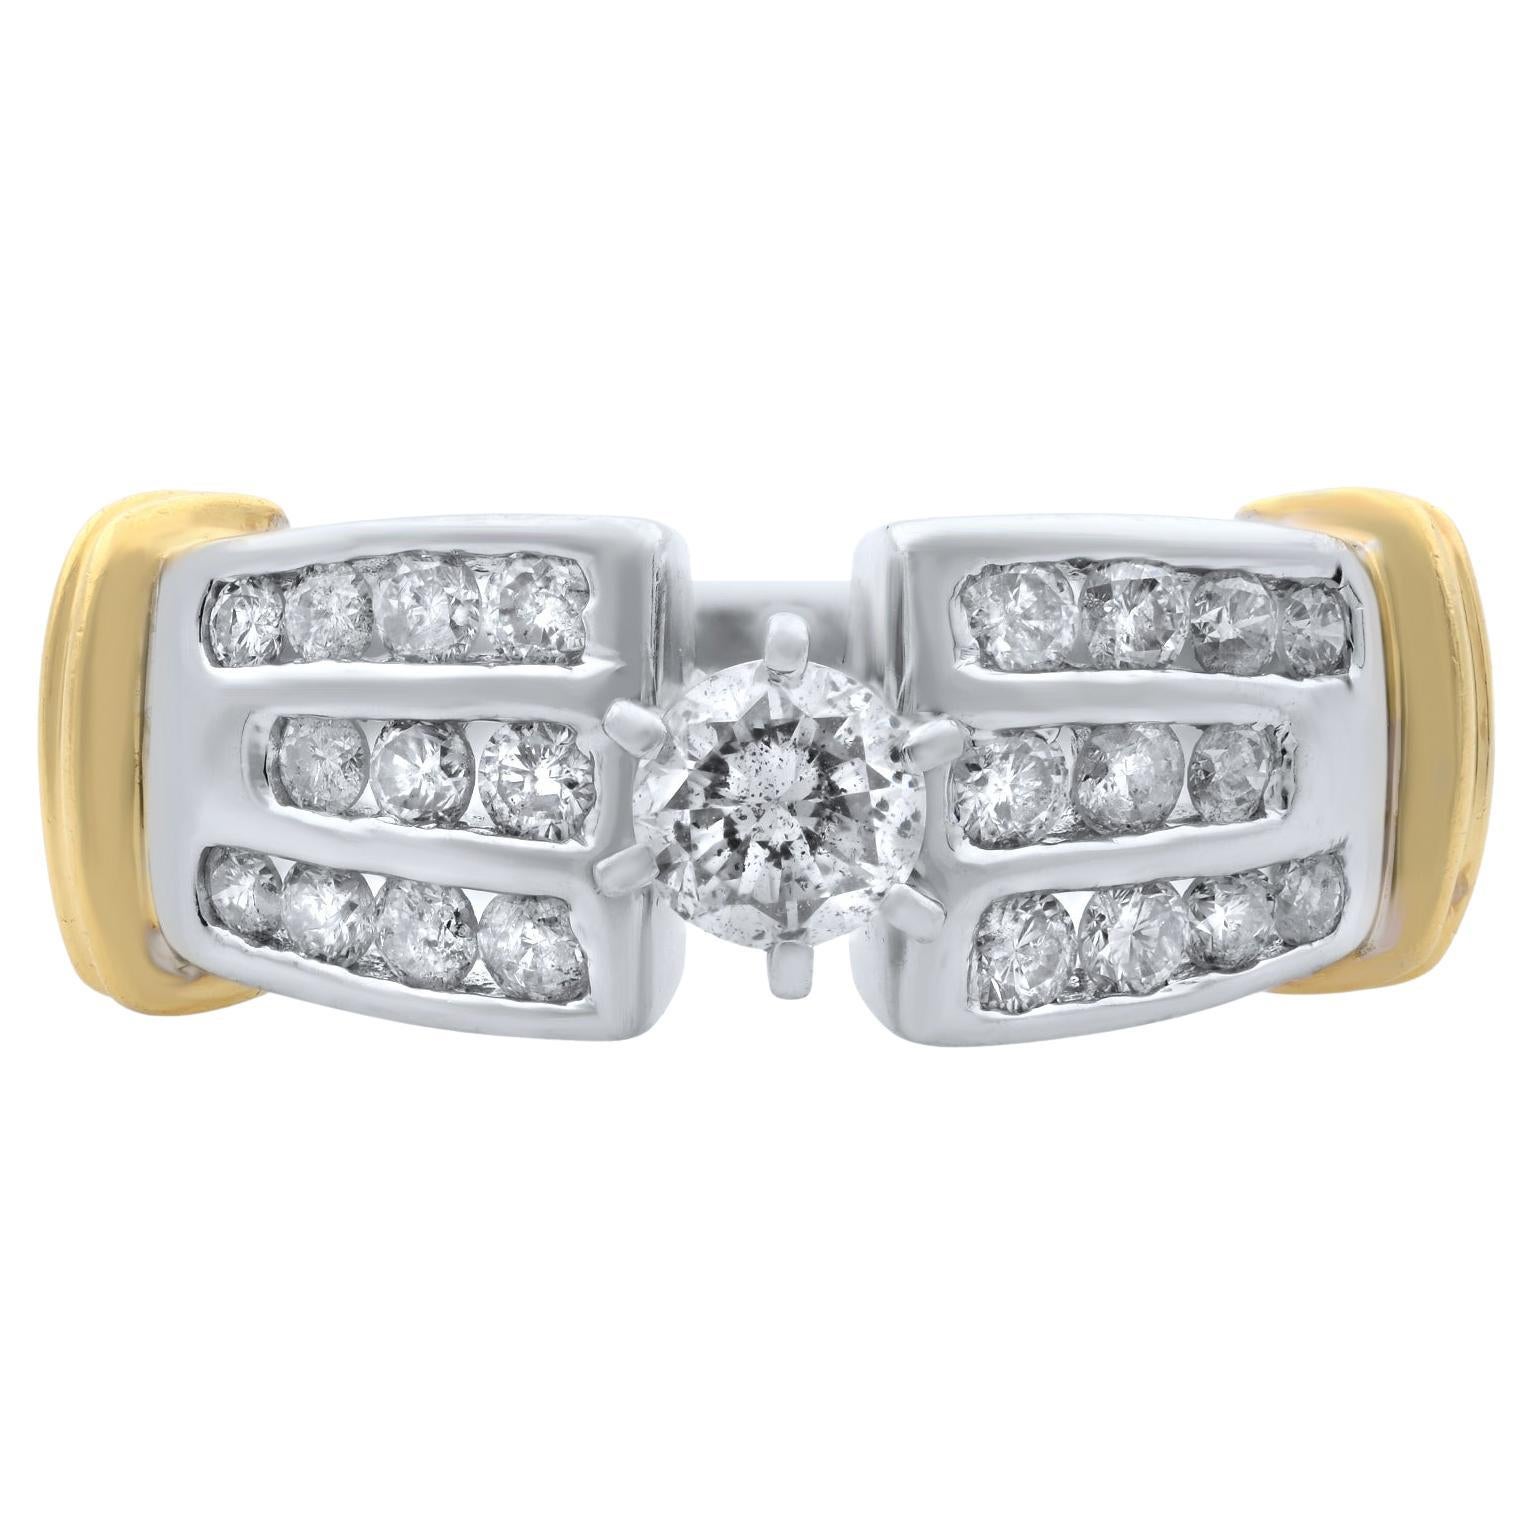 Rachel Koen Diamond Ladies Ring 14K White and Yellow Gold 0.75cttw For Sale